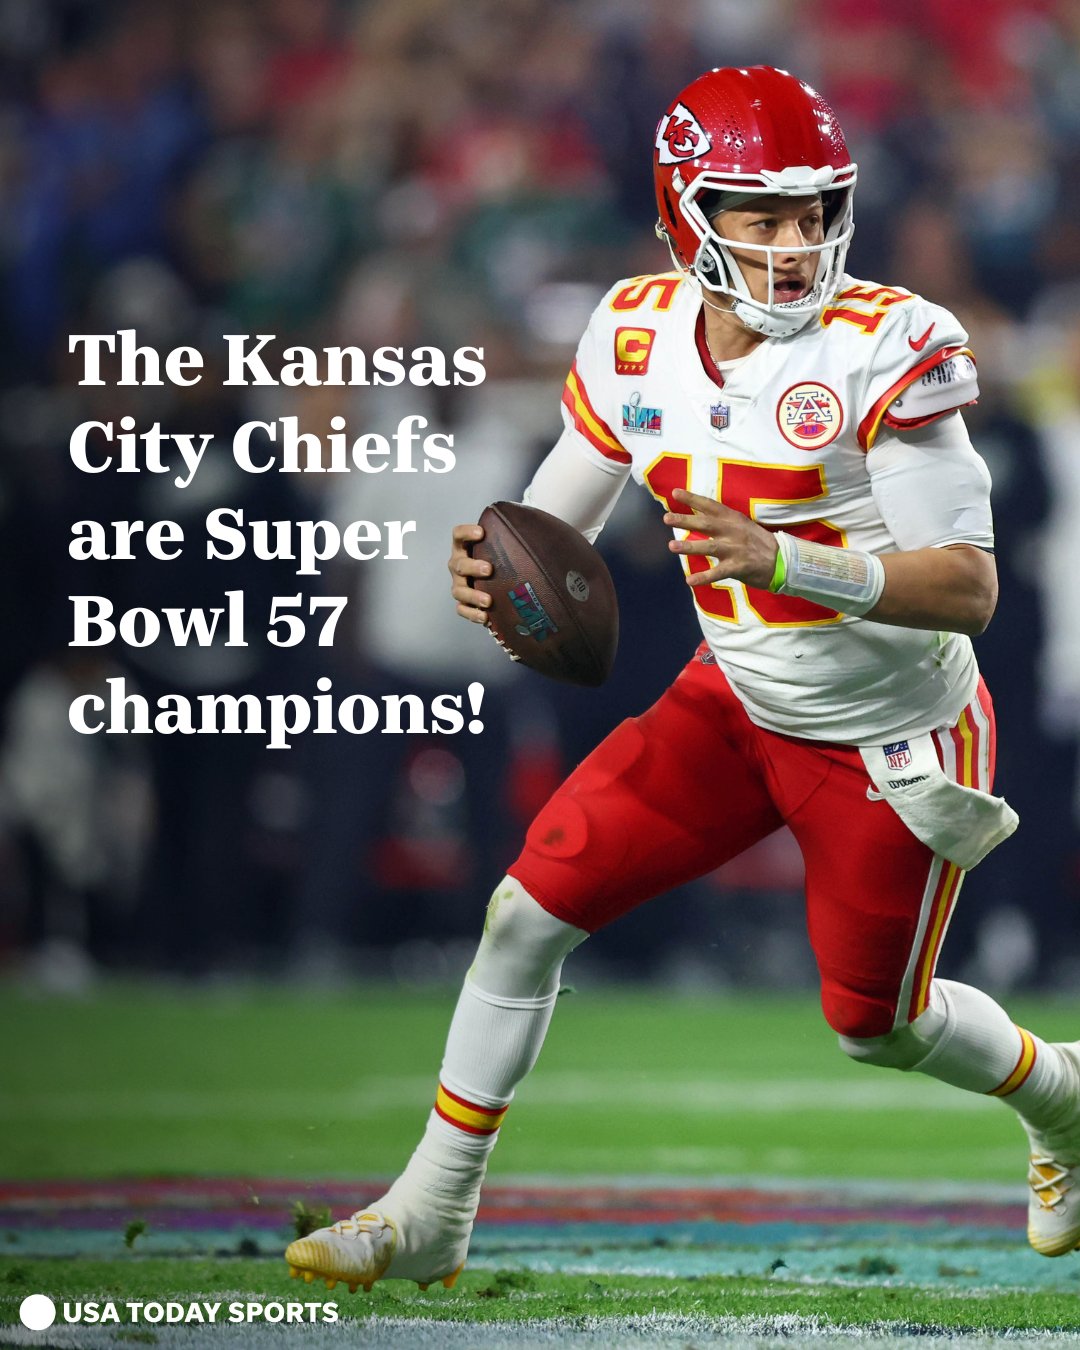 Stadium on X: The Kansas City Chiefs are Super Bowl 57 champions